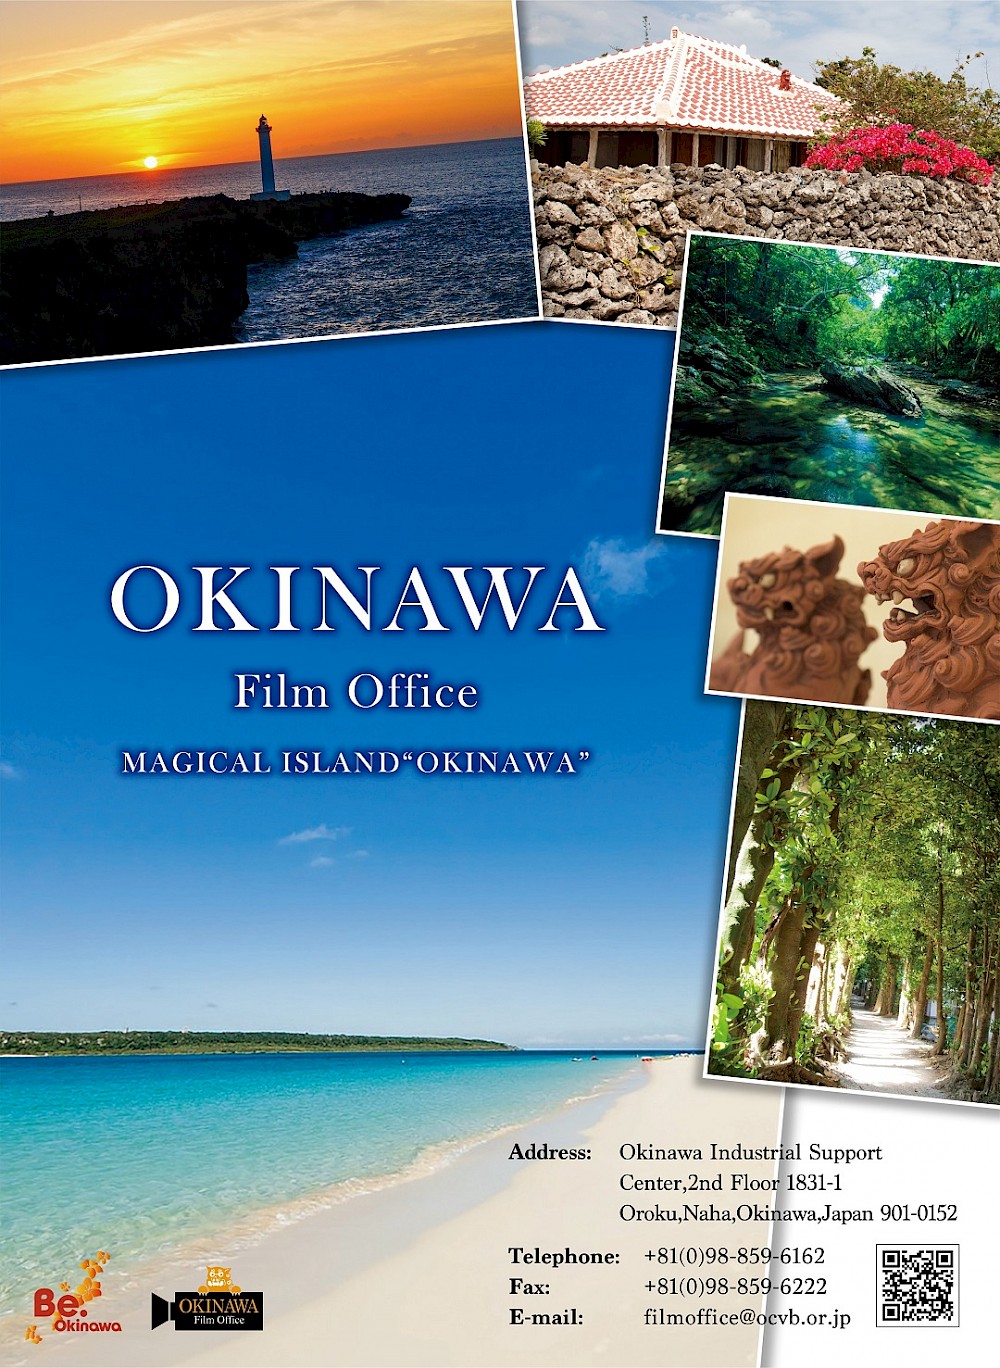 Okinawa Film office (FO)